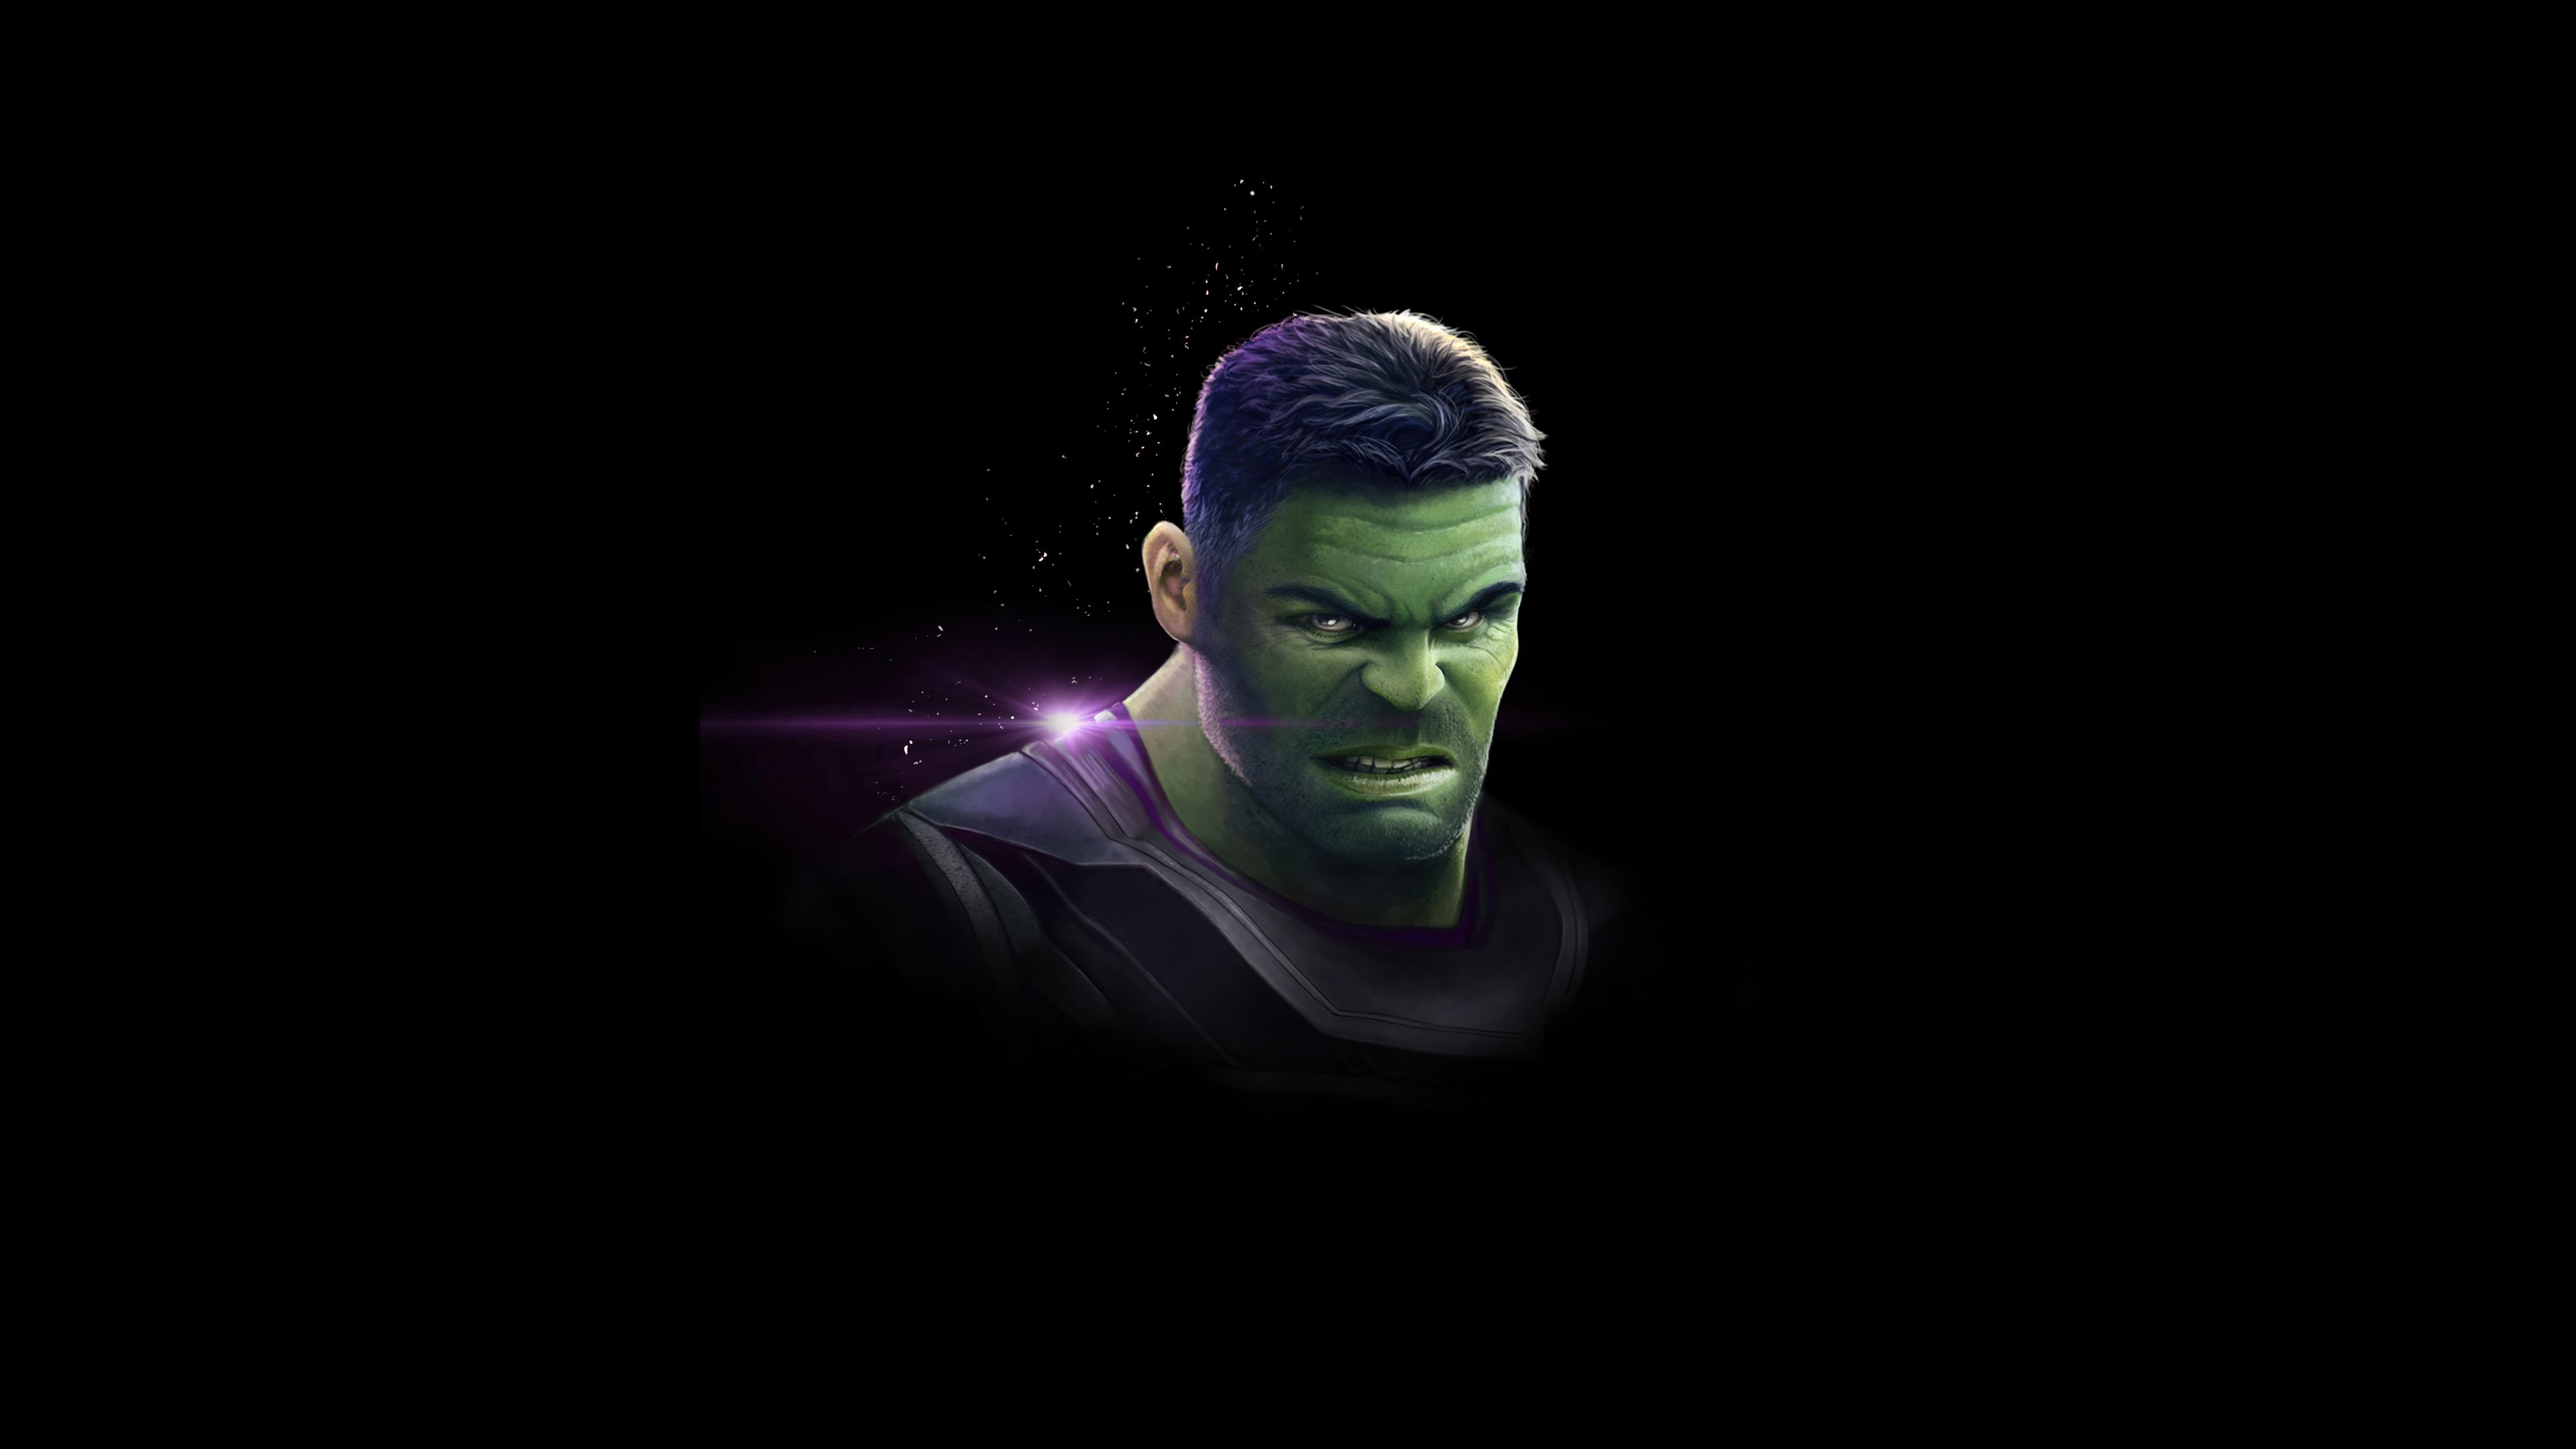 Hulk Dark 4k, HD Superheroes, 4k Wallpaper, Image, Background, Photo and Picture